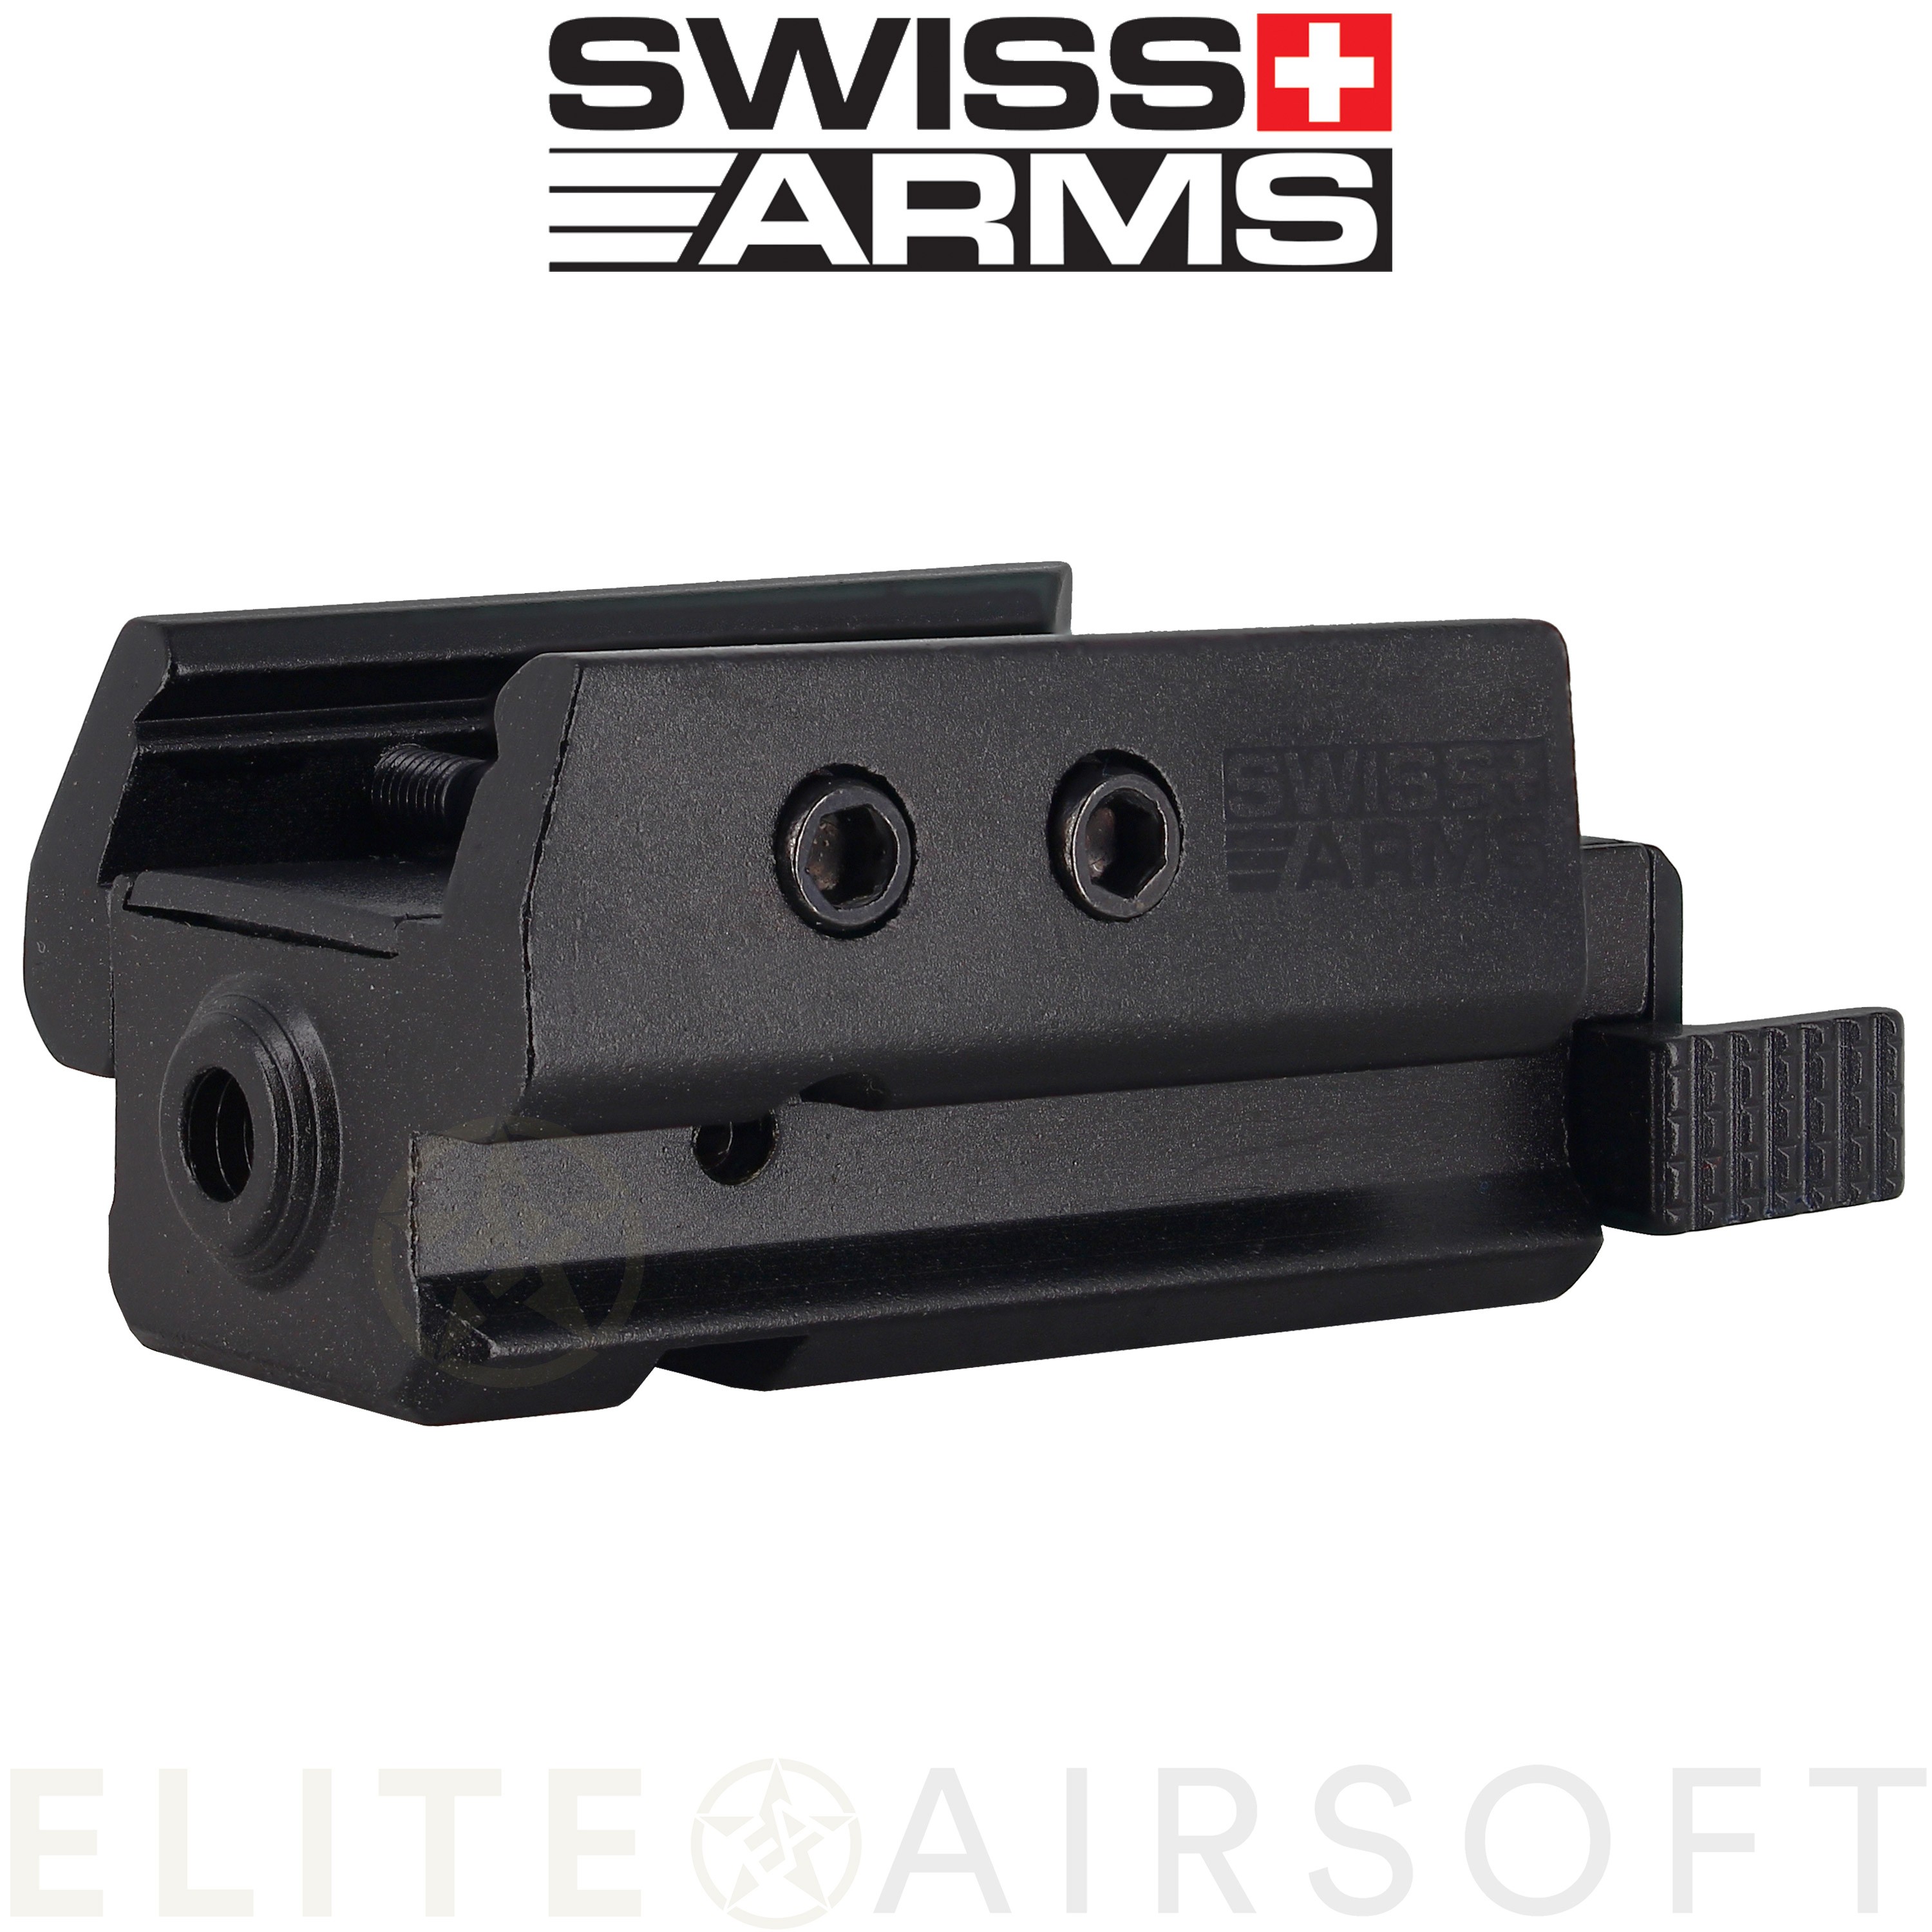 Swiss arms - Micro laser - Noir - Elite Airsoft